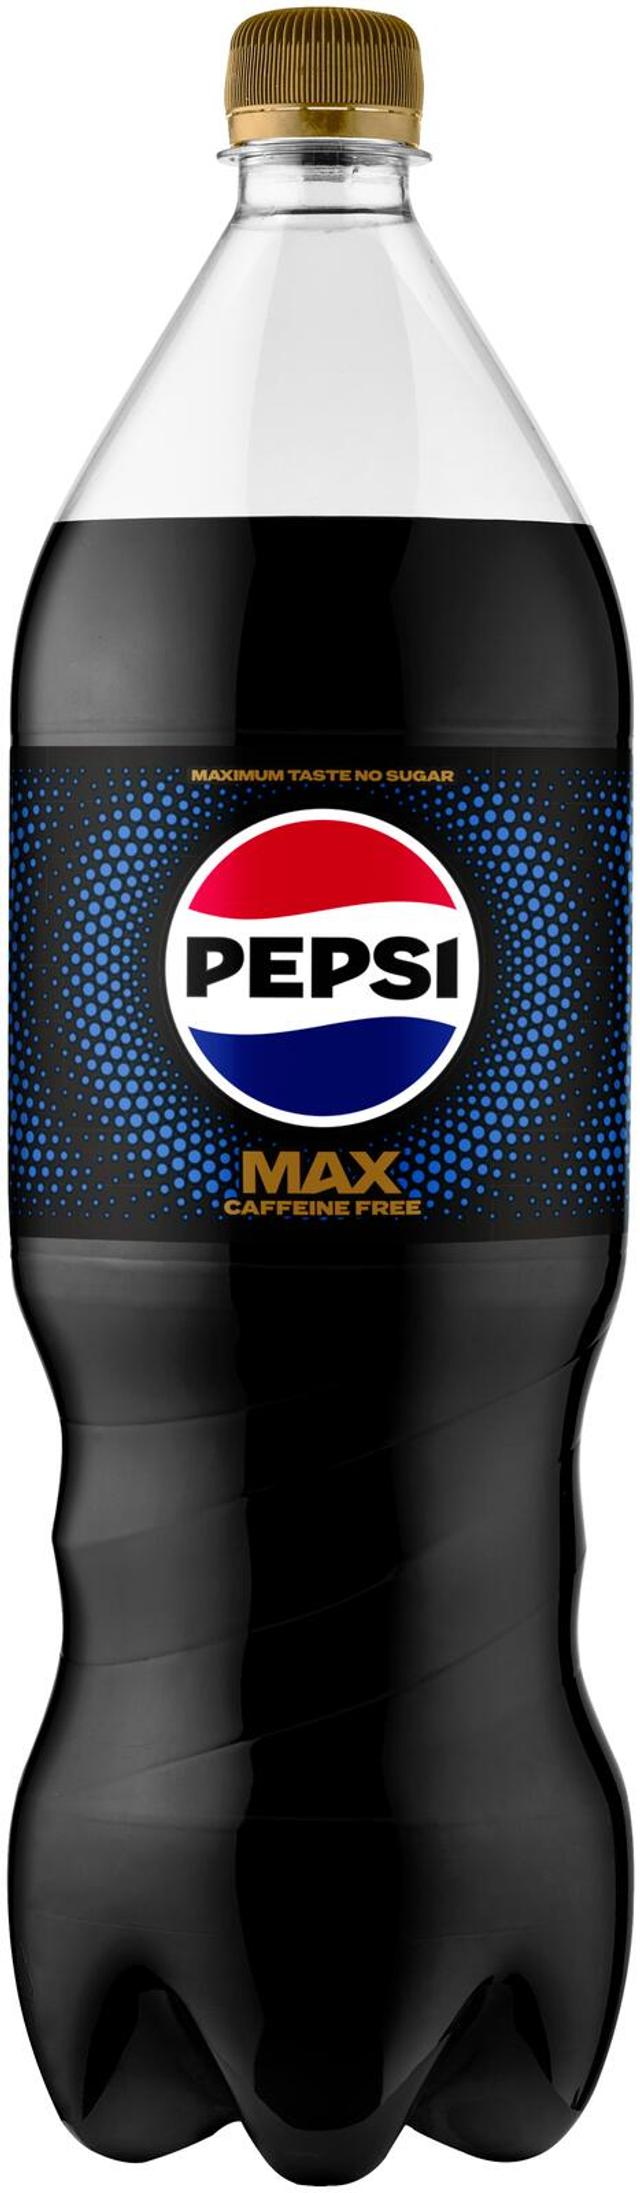 Pepsi Max Caffeine-Free virvoitusjuoma 1,5 l